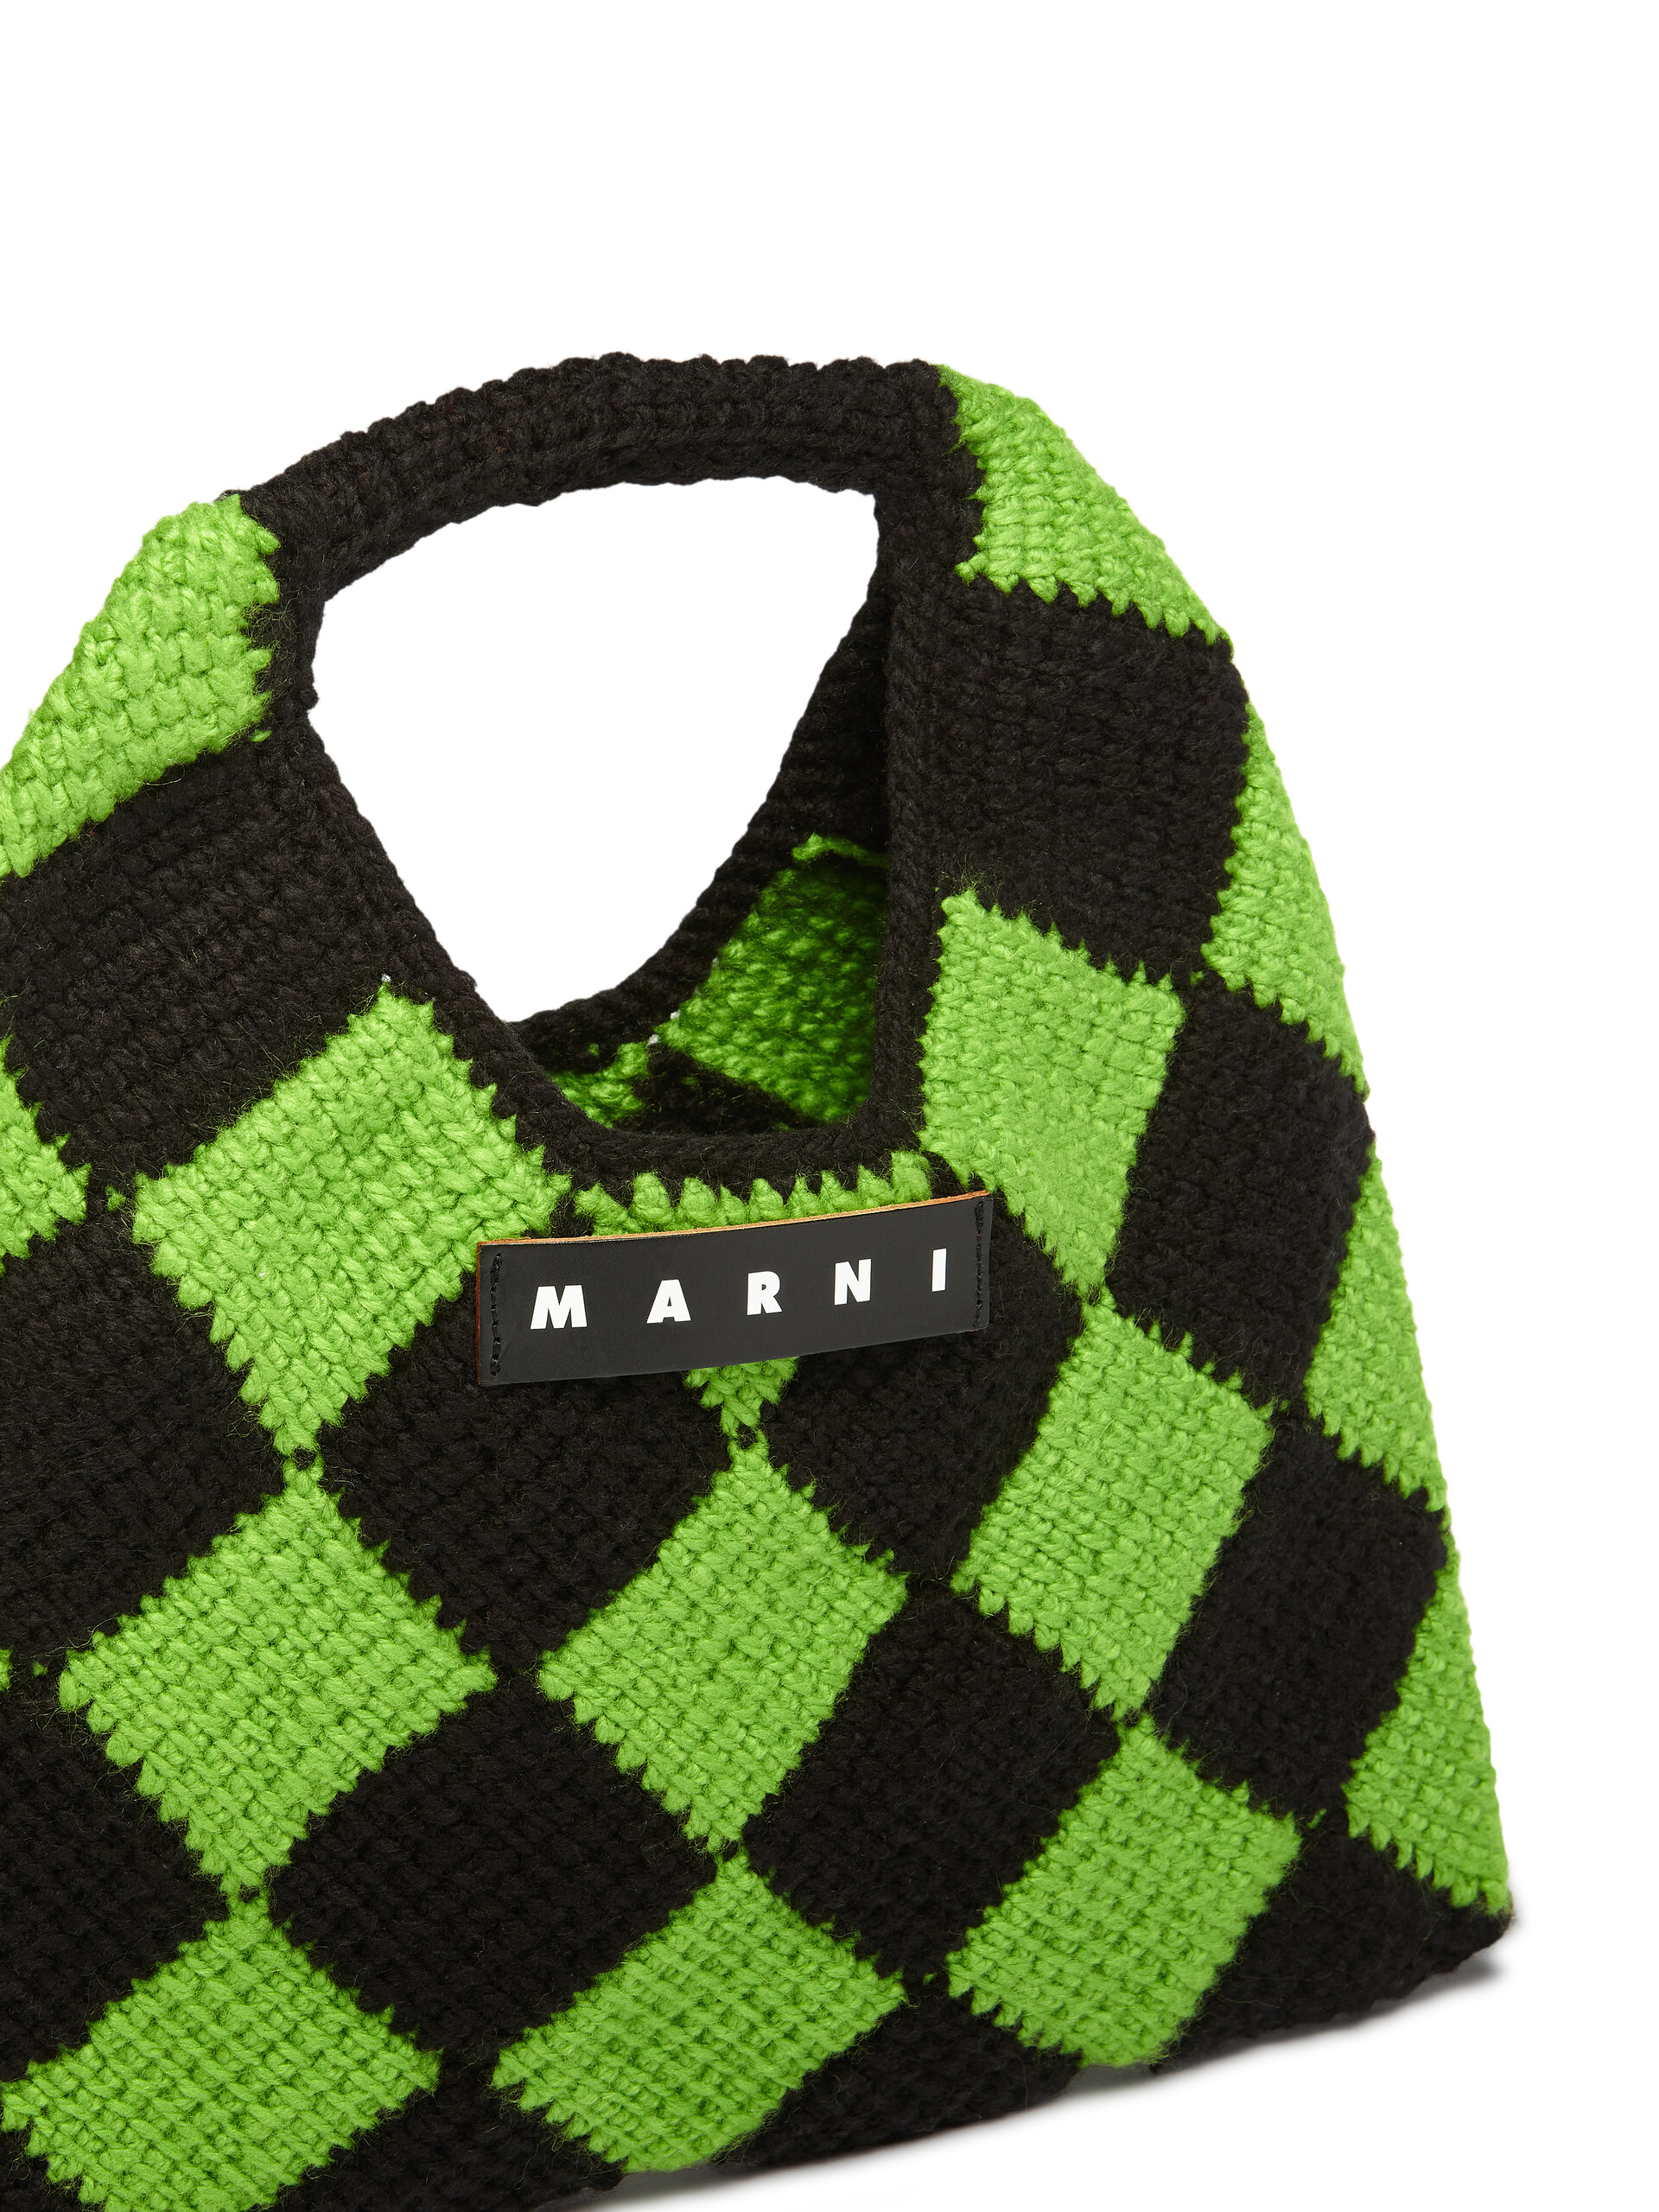 MARNI MARKET DIAMOND medium bag in green and black tech wool - Shopping Bags - Image 4